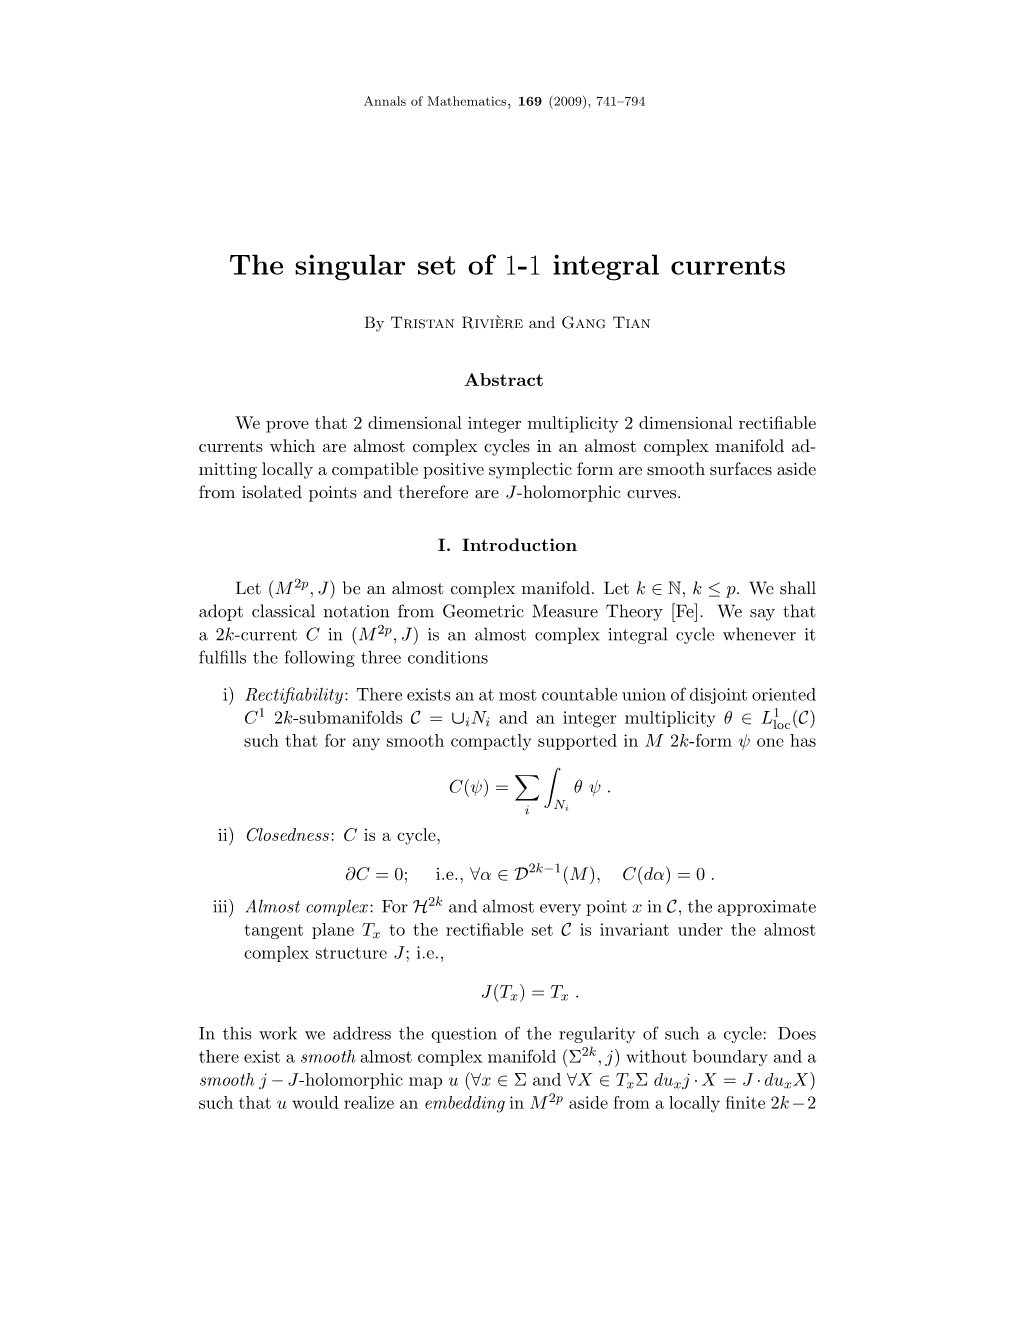 The Singular Set of 1-1 Integral Currents